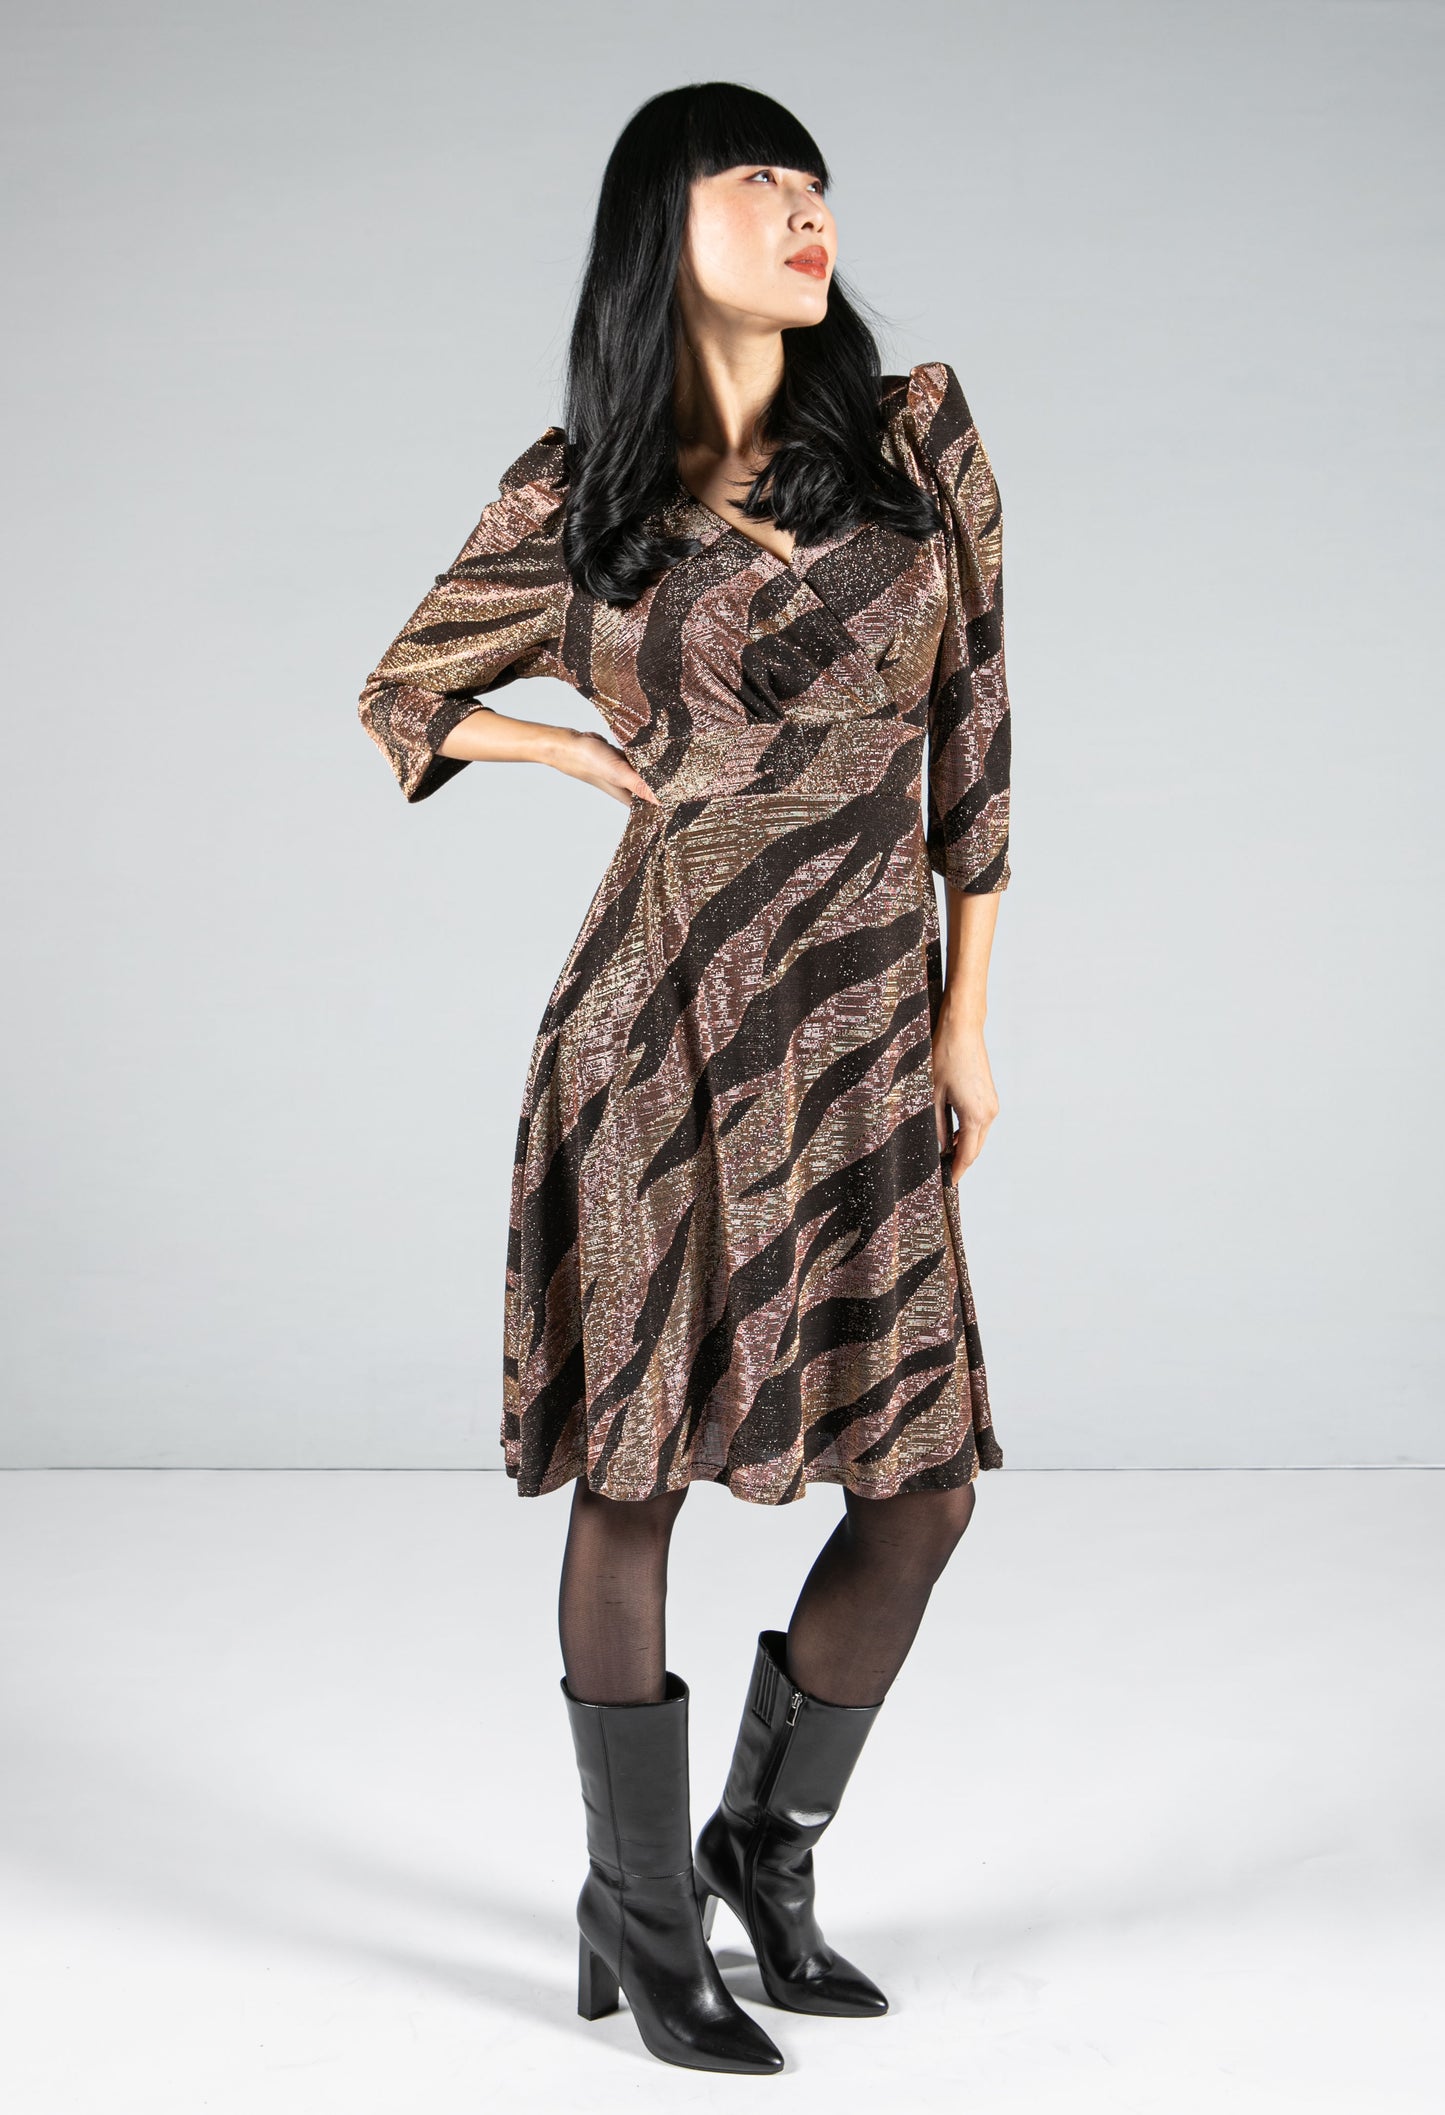 Soft Lurex Design Wrap Style Bodice Dress